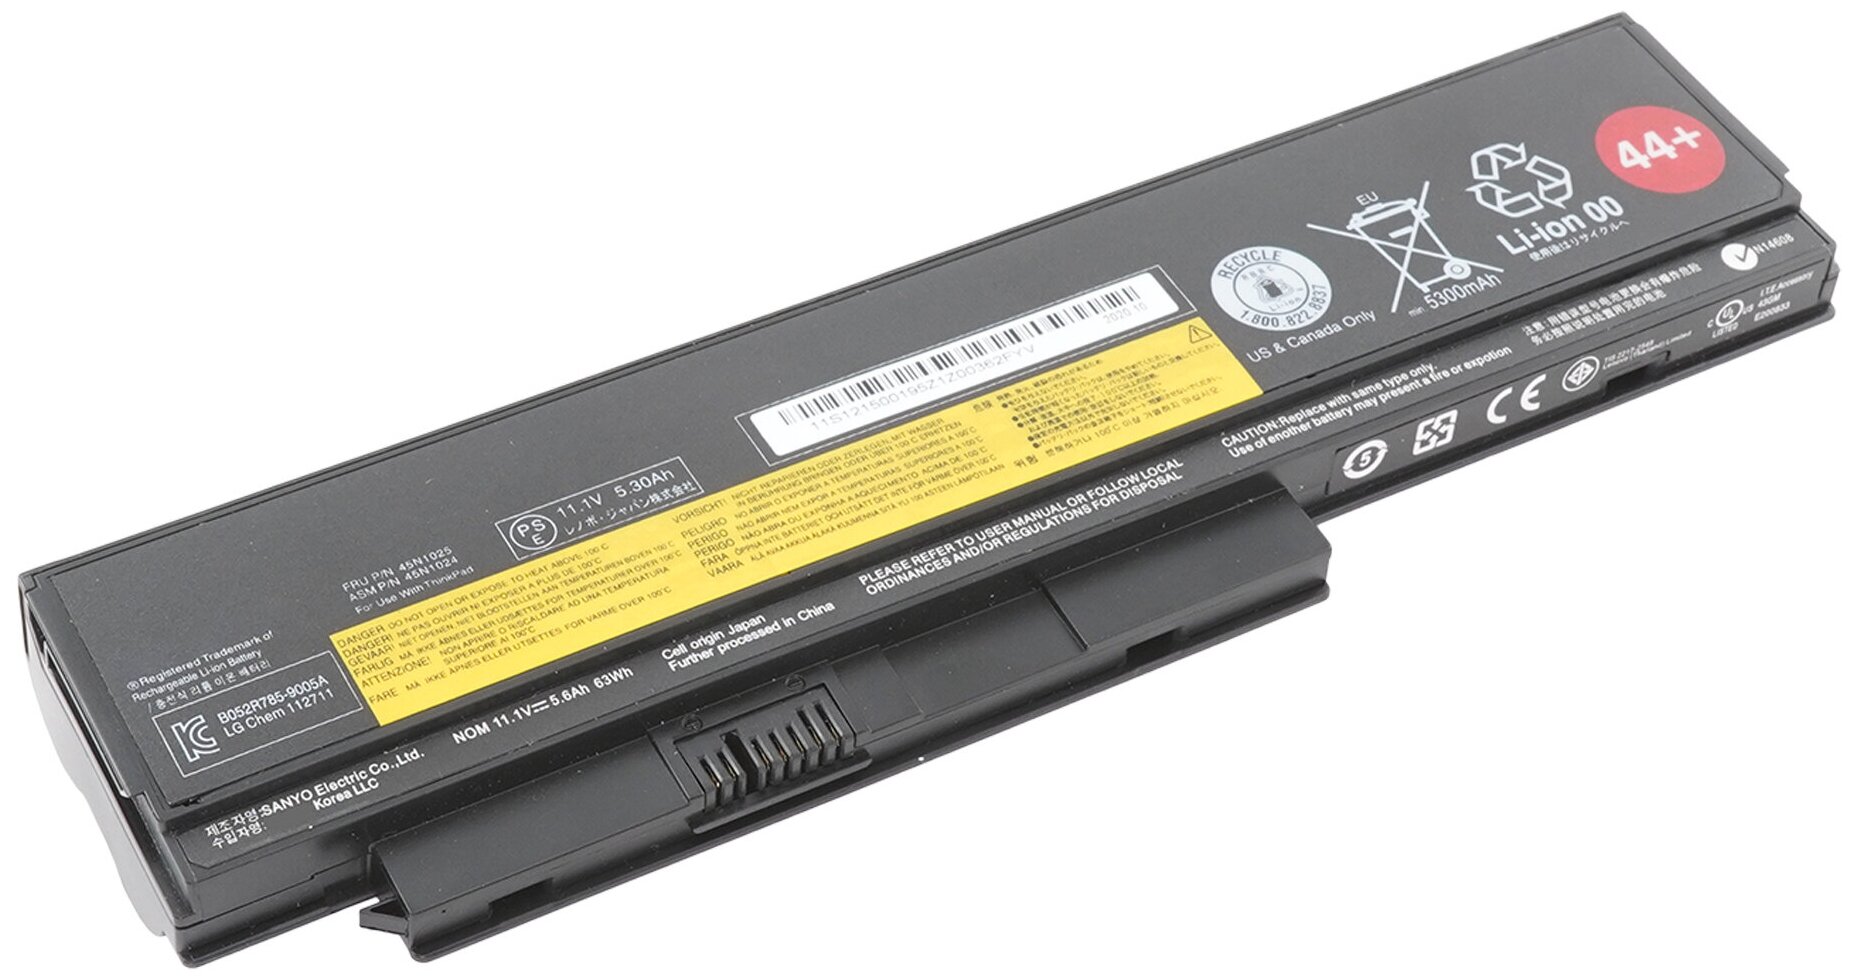 Аккумулятор 45N1024 для Lenovo ThinkPad X220 / X220s / X230 (0A36281, 42T4902) 44+